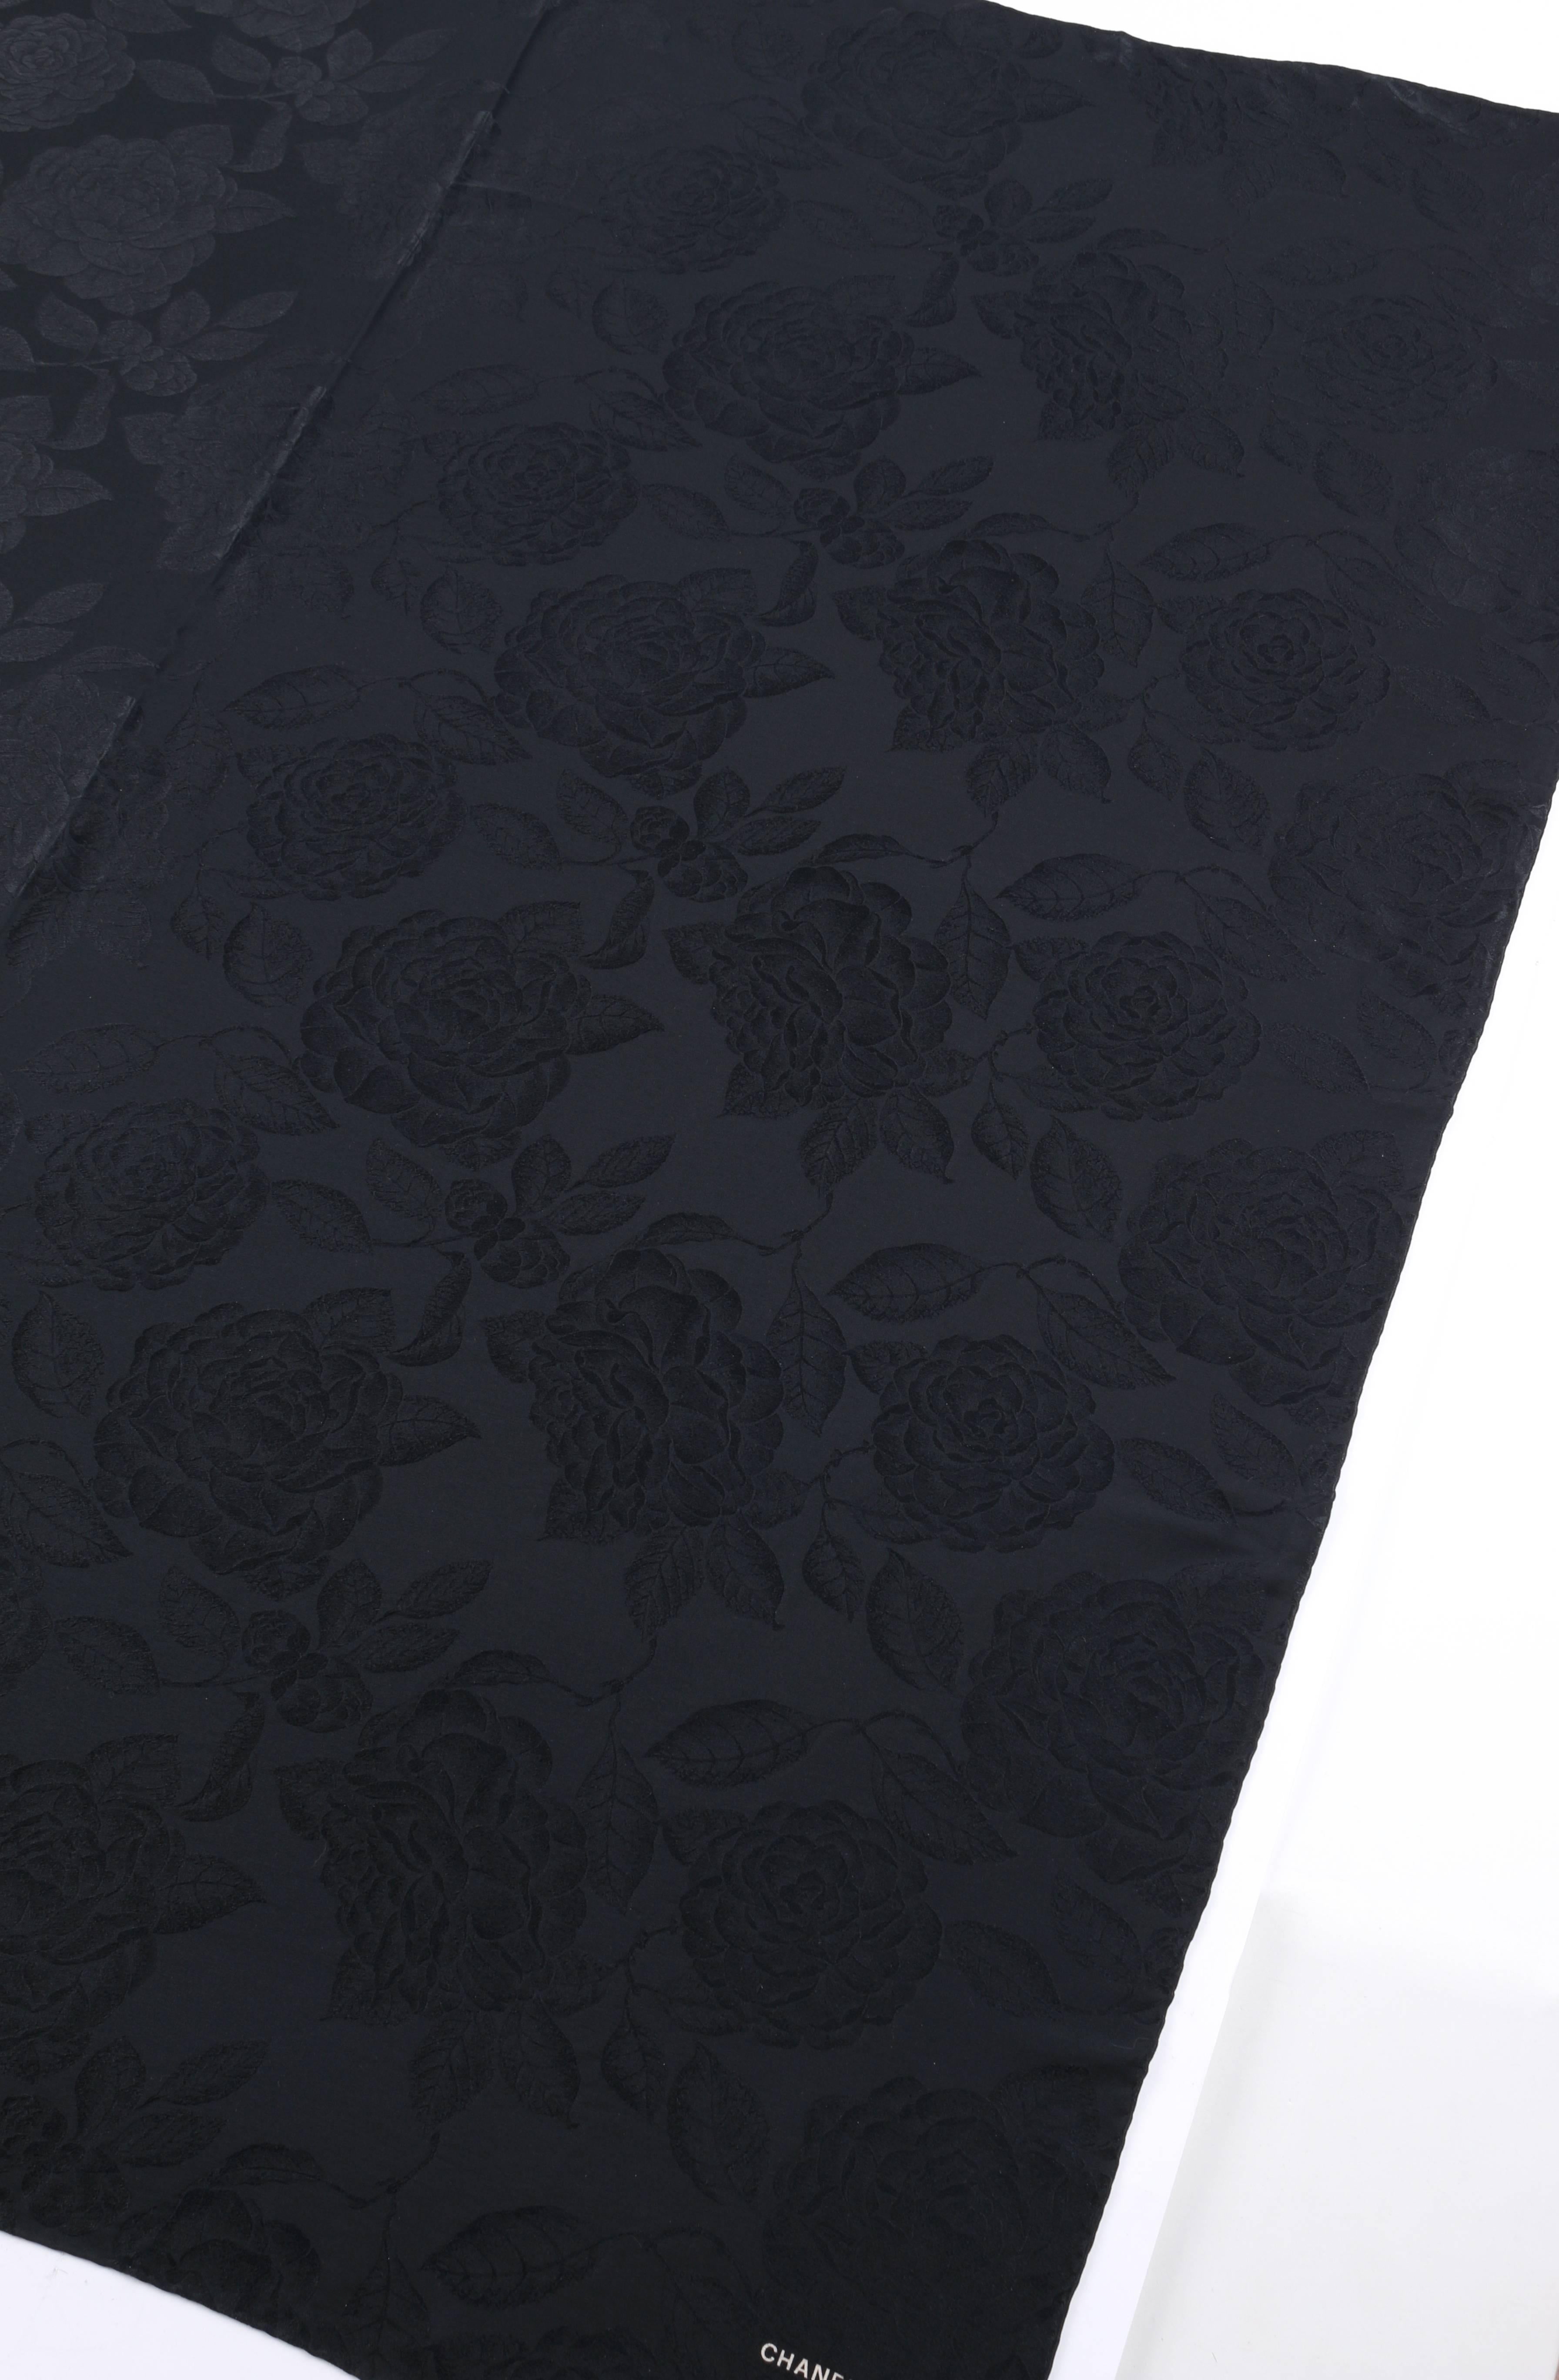 CHANEL Black Satin Camellia Print 100% Silk Large Scarf Wrap Shawl With Box  3